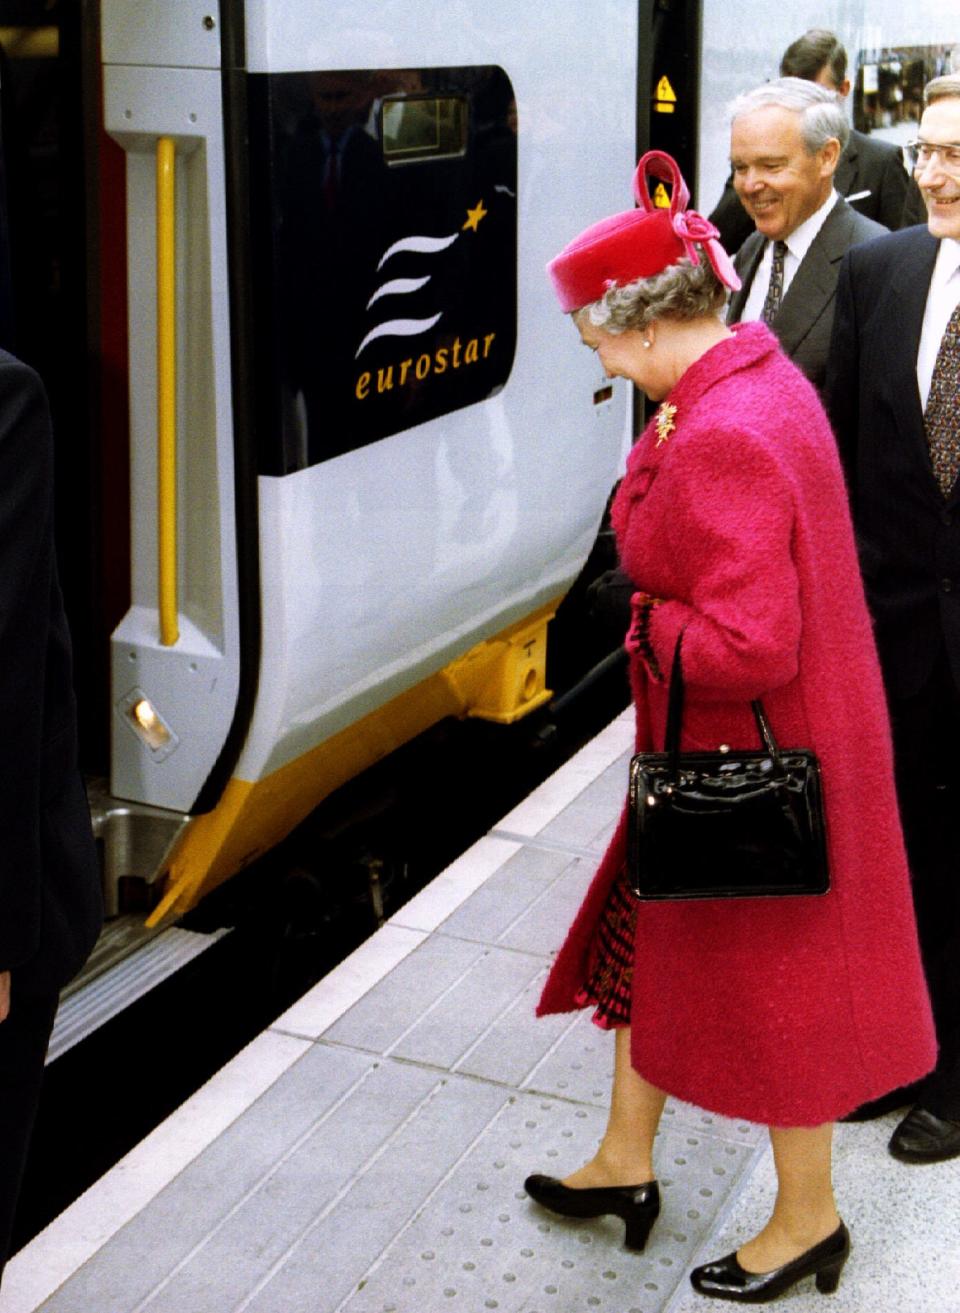 Queen Elizabeth boards a train in 1994.